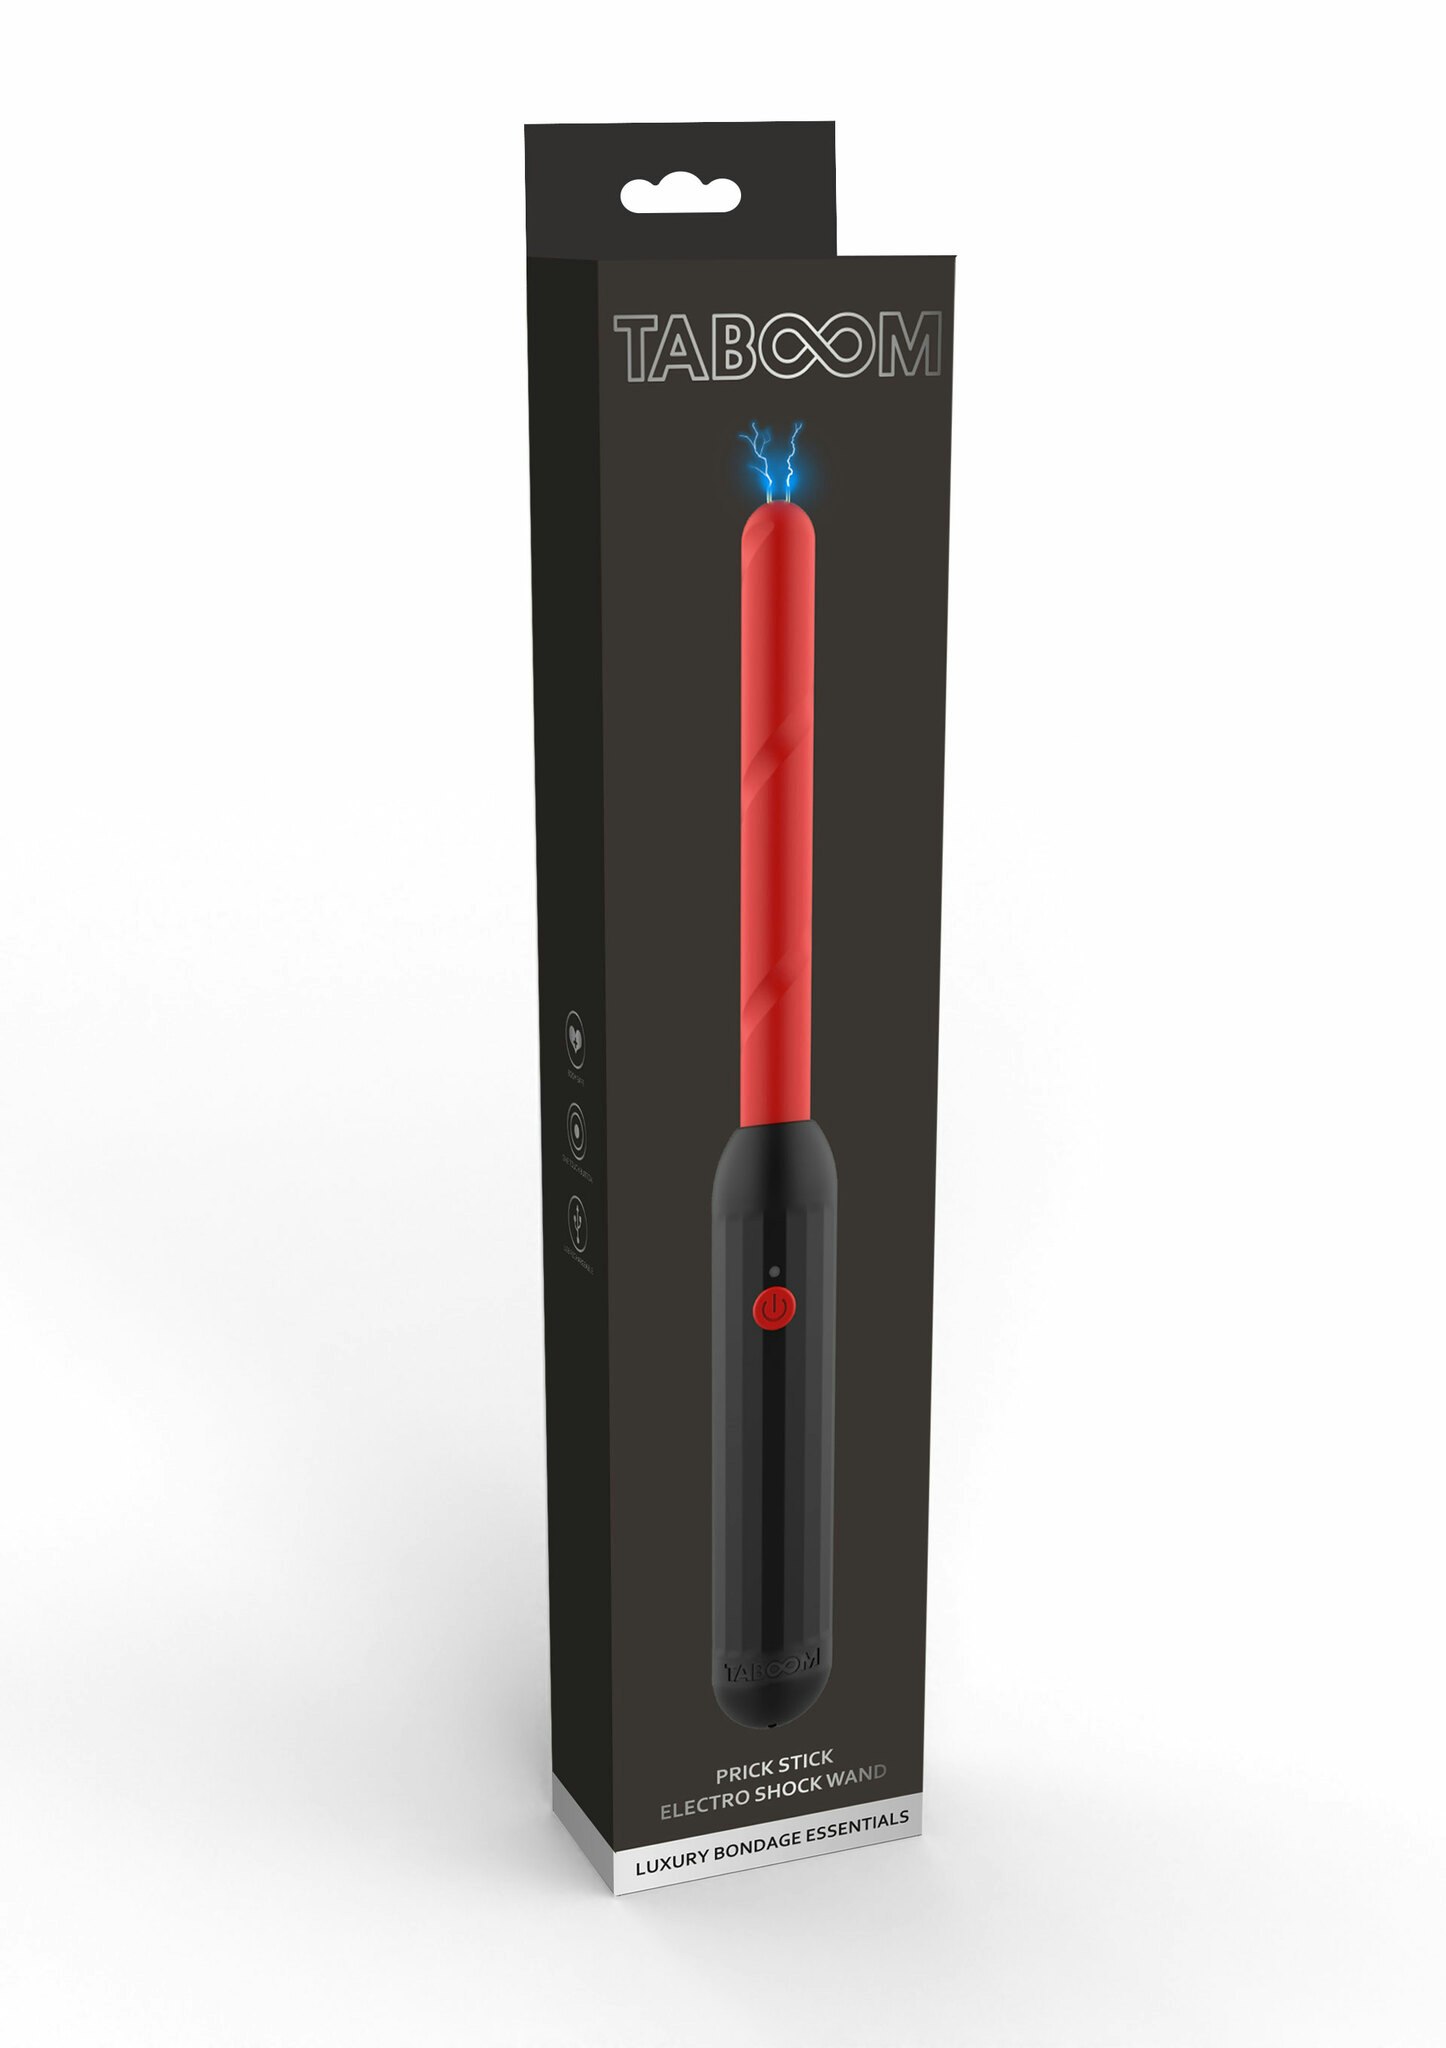 Taboom - Prick Stick Electro Shock Wand